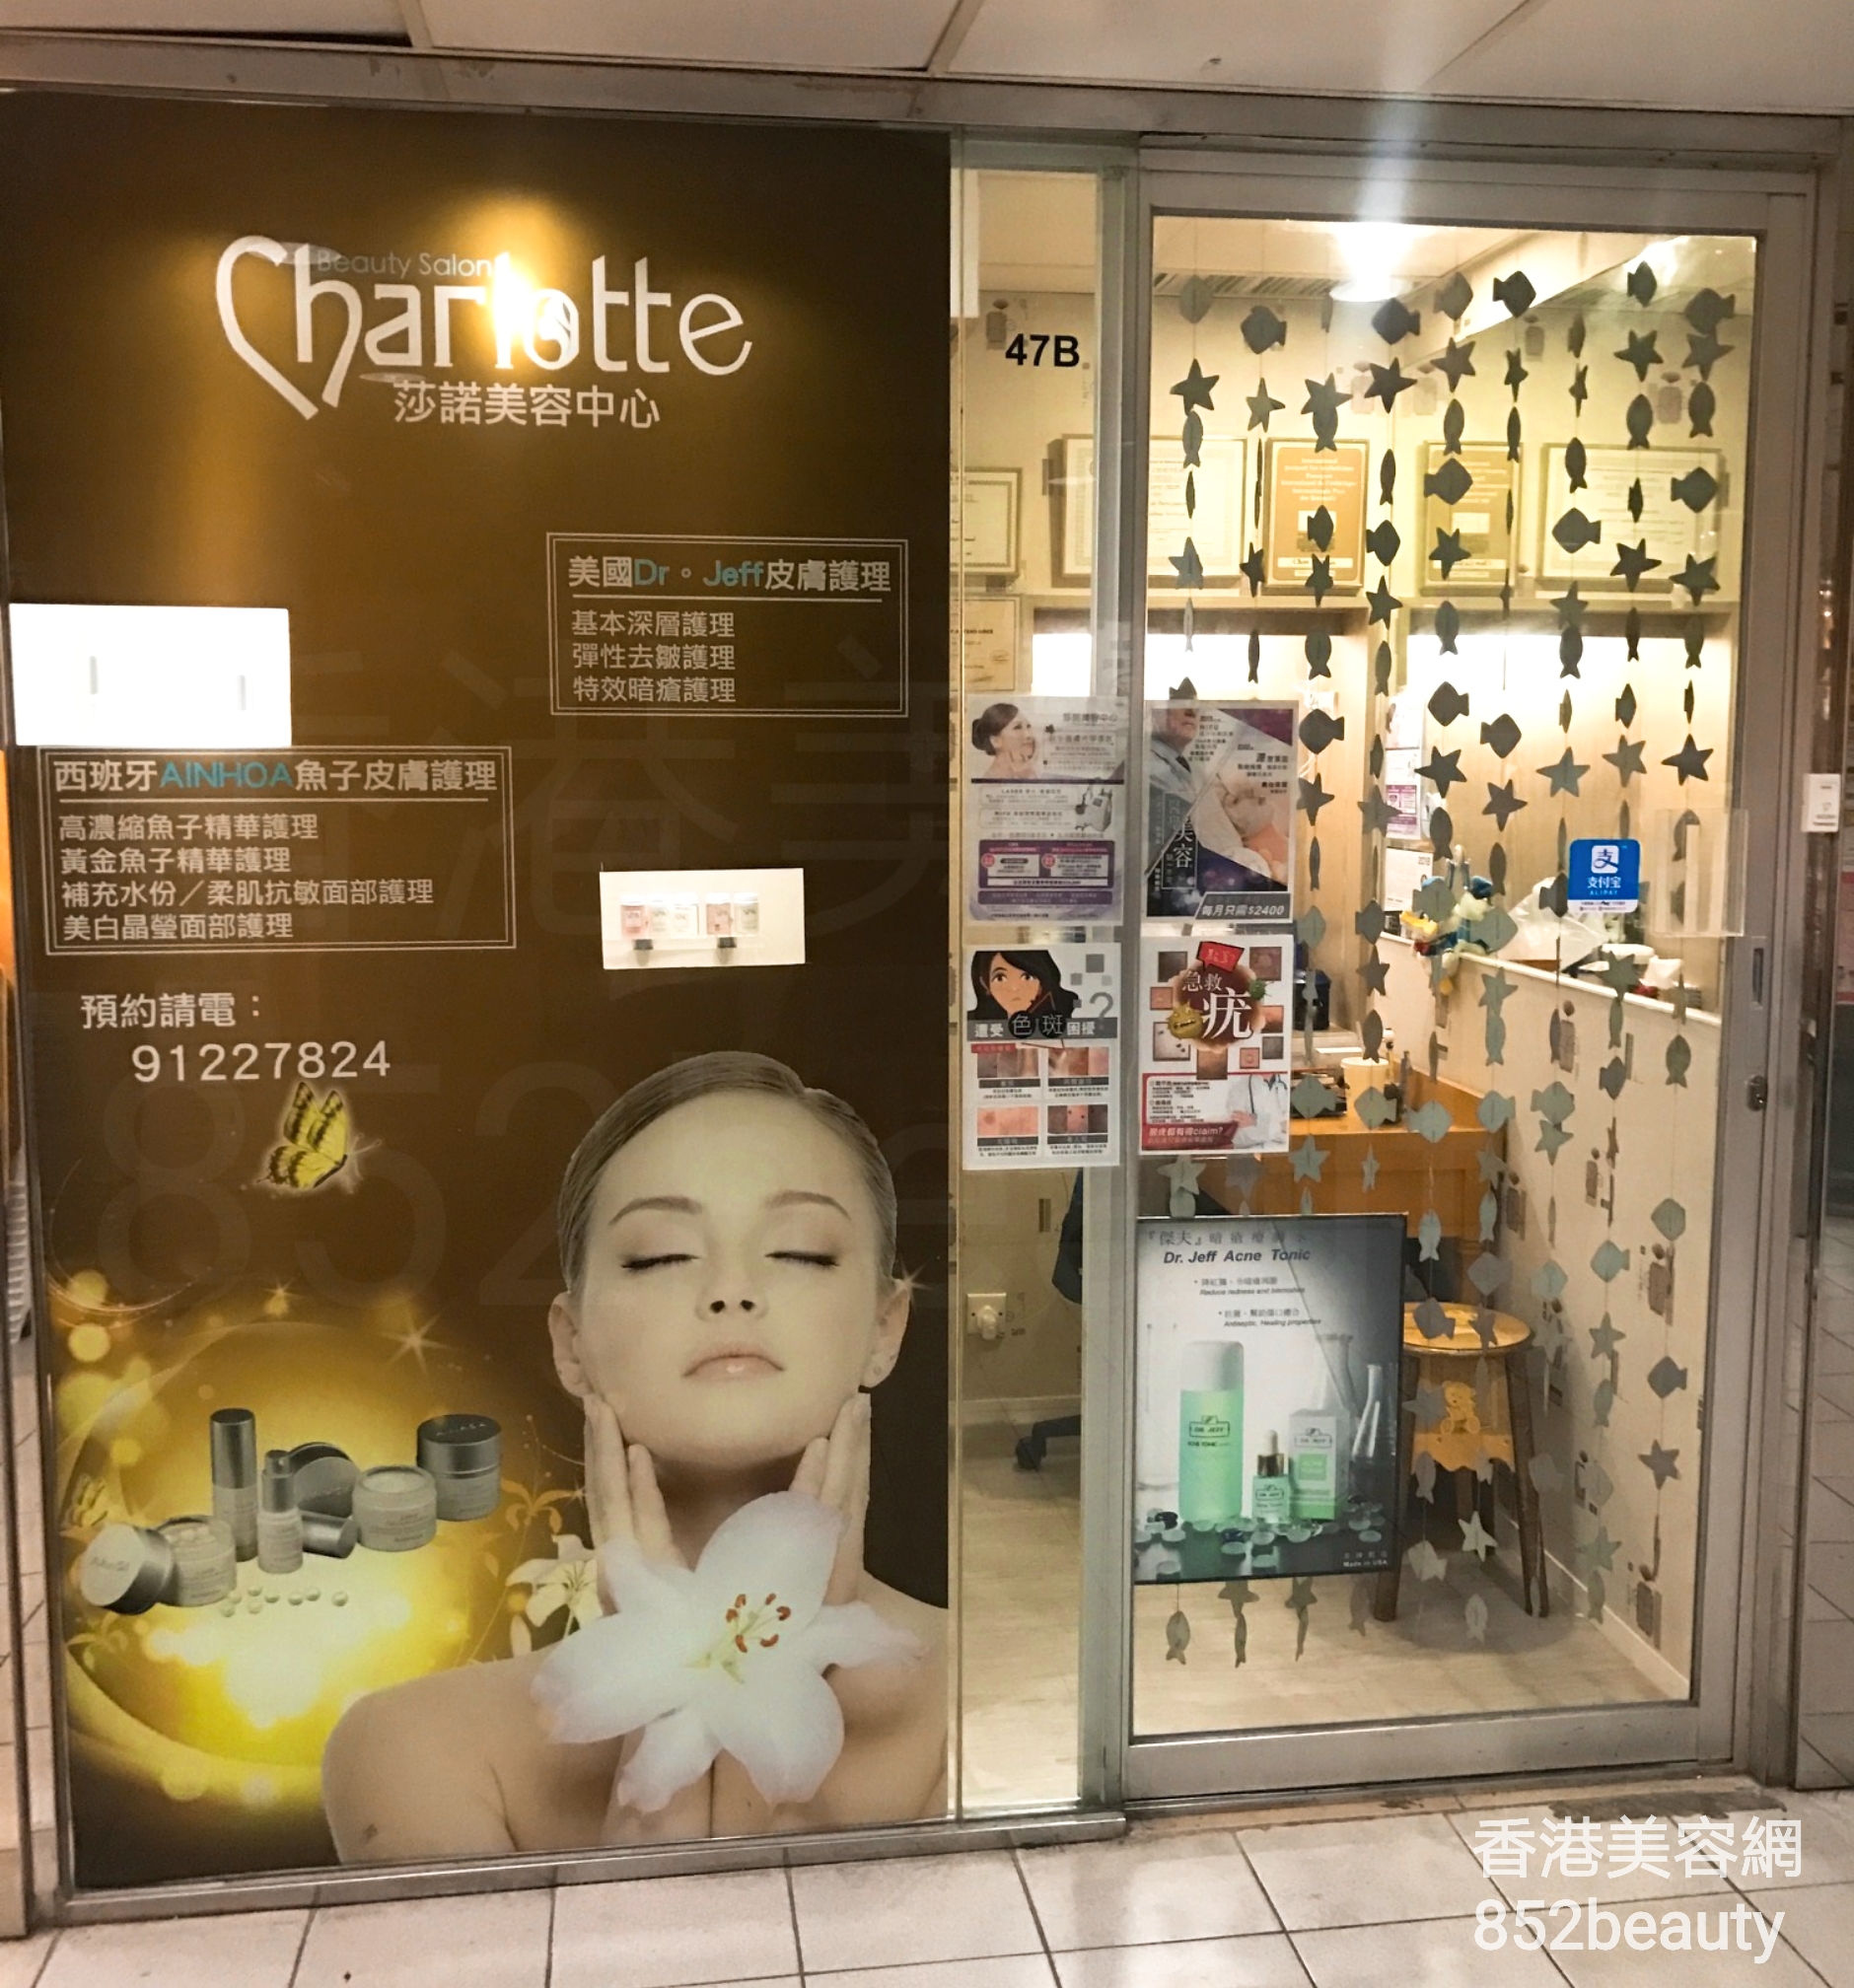 Hand and foot care: 莎諾美容中心 Charlotte Beauty Salon